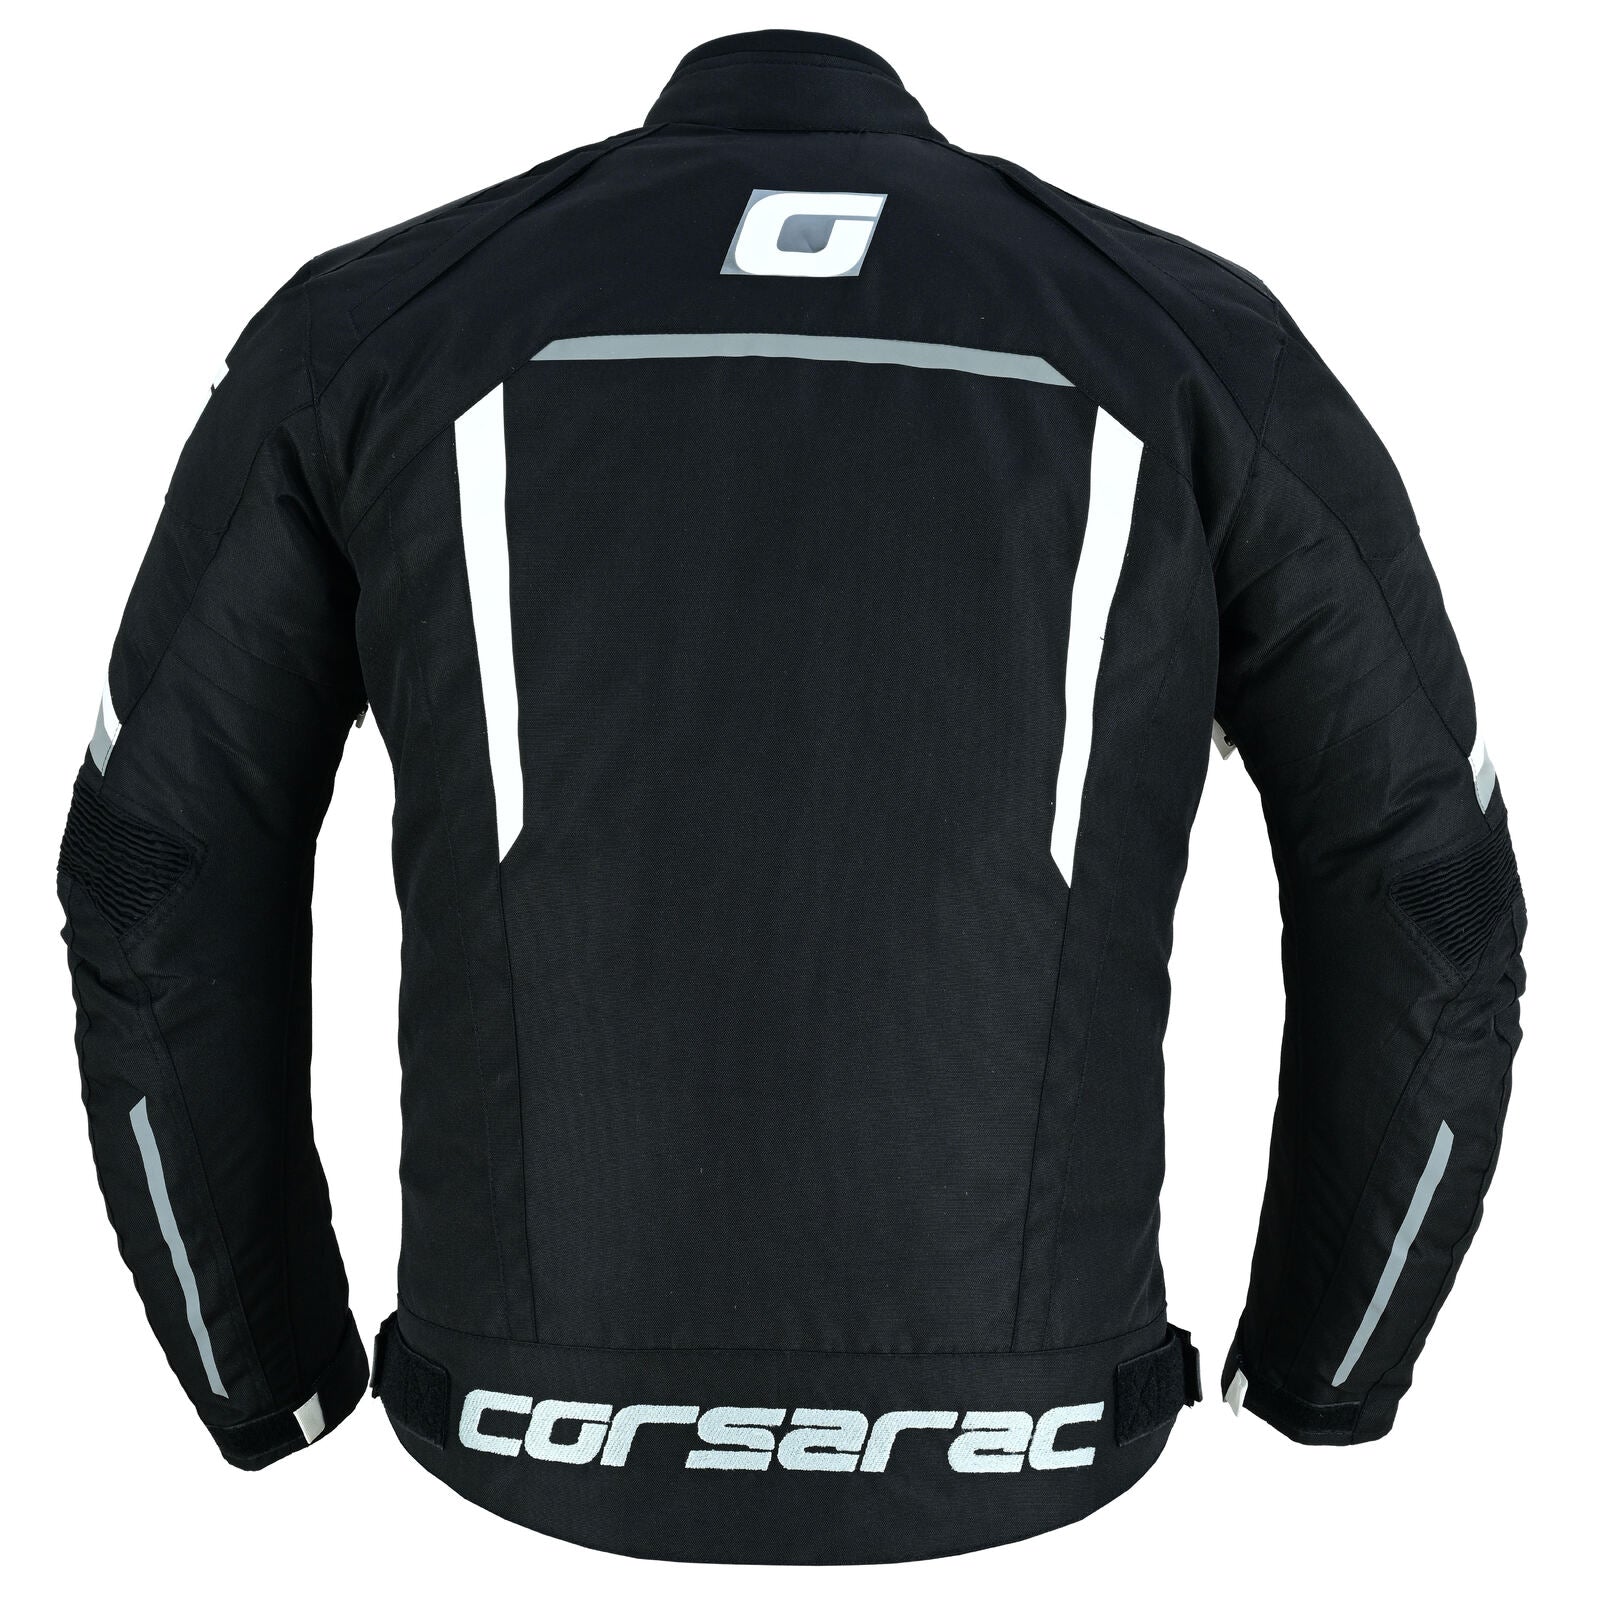 Corsarac Motorbike Textile Jacket WP Men's Sport